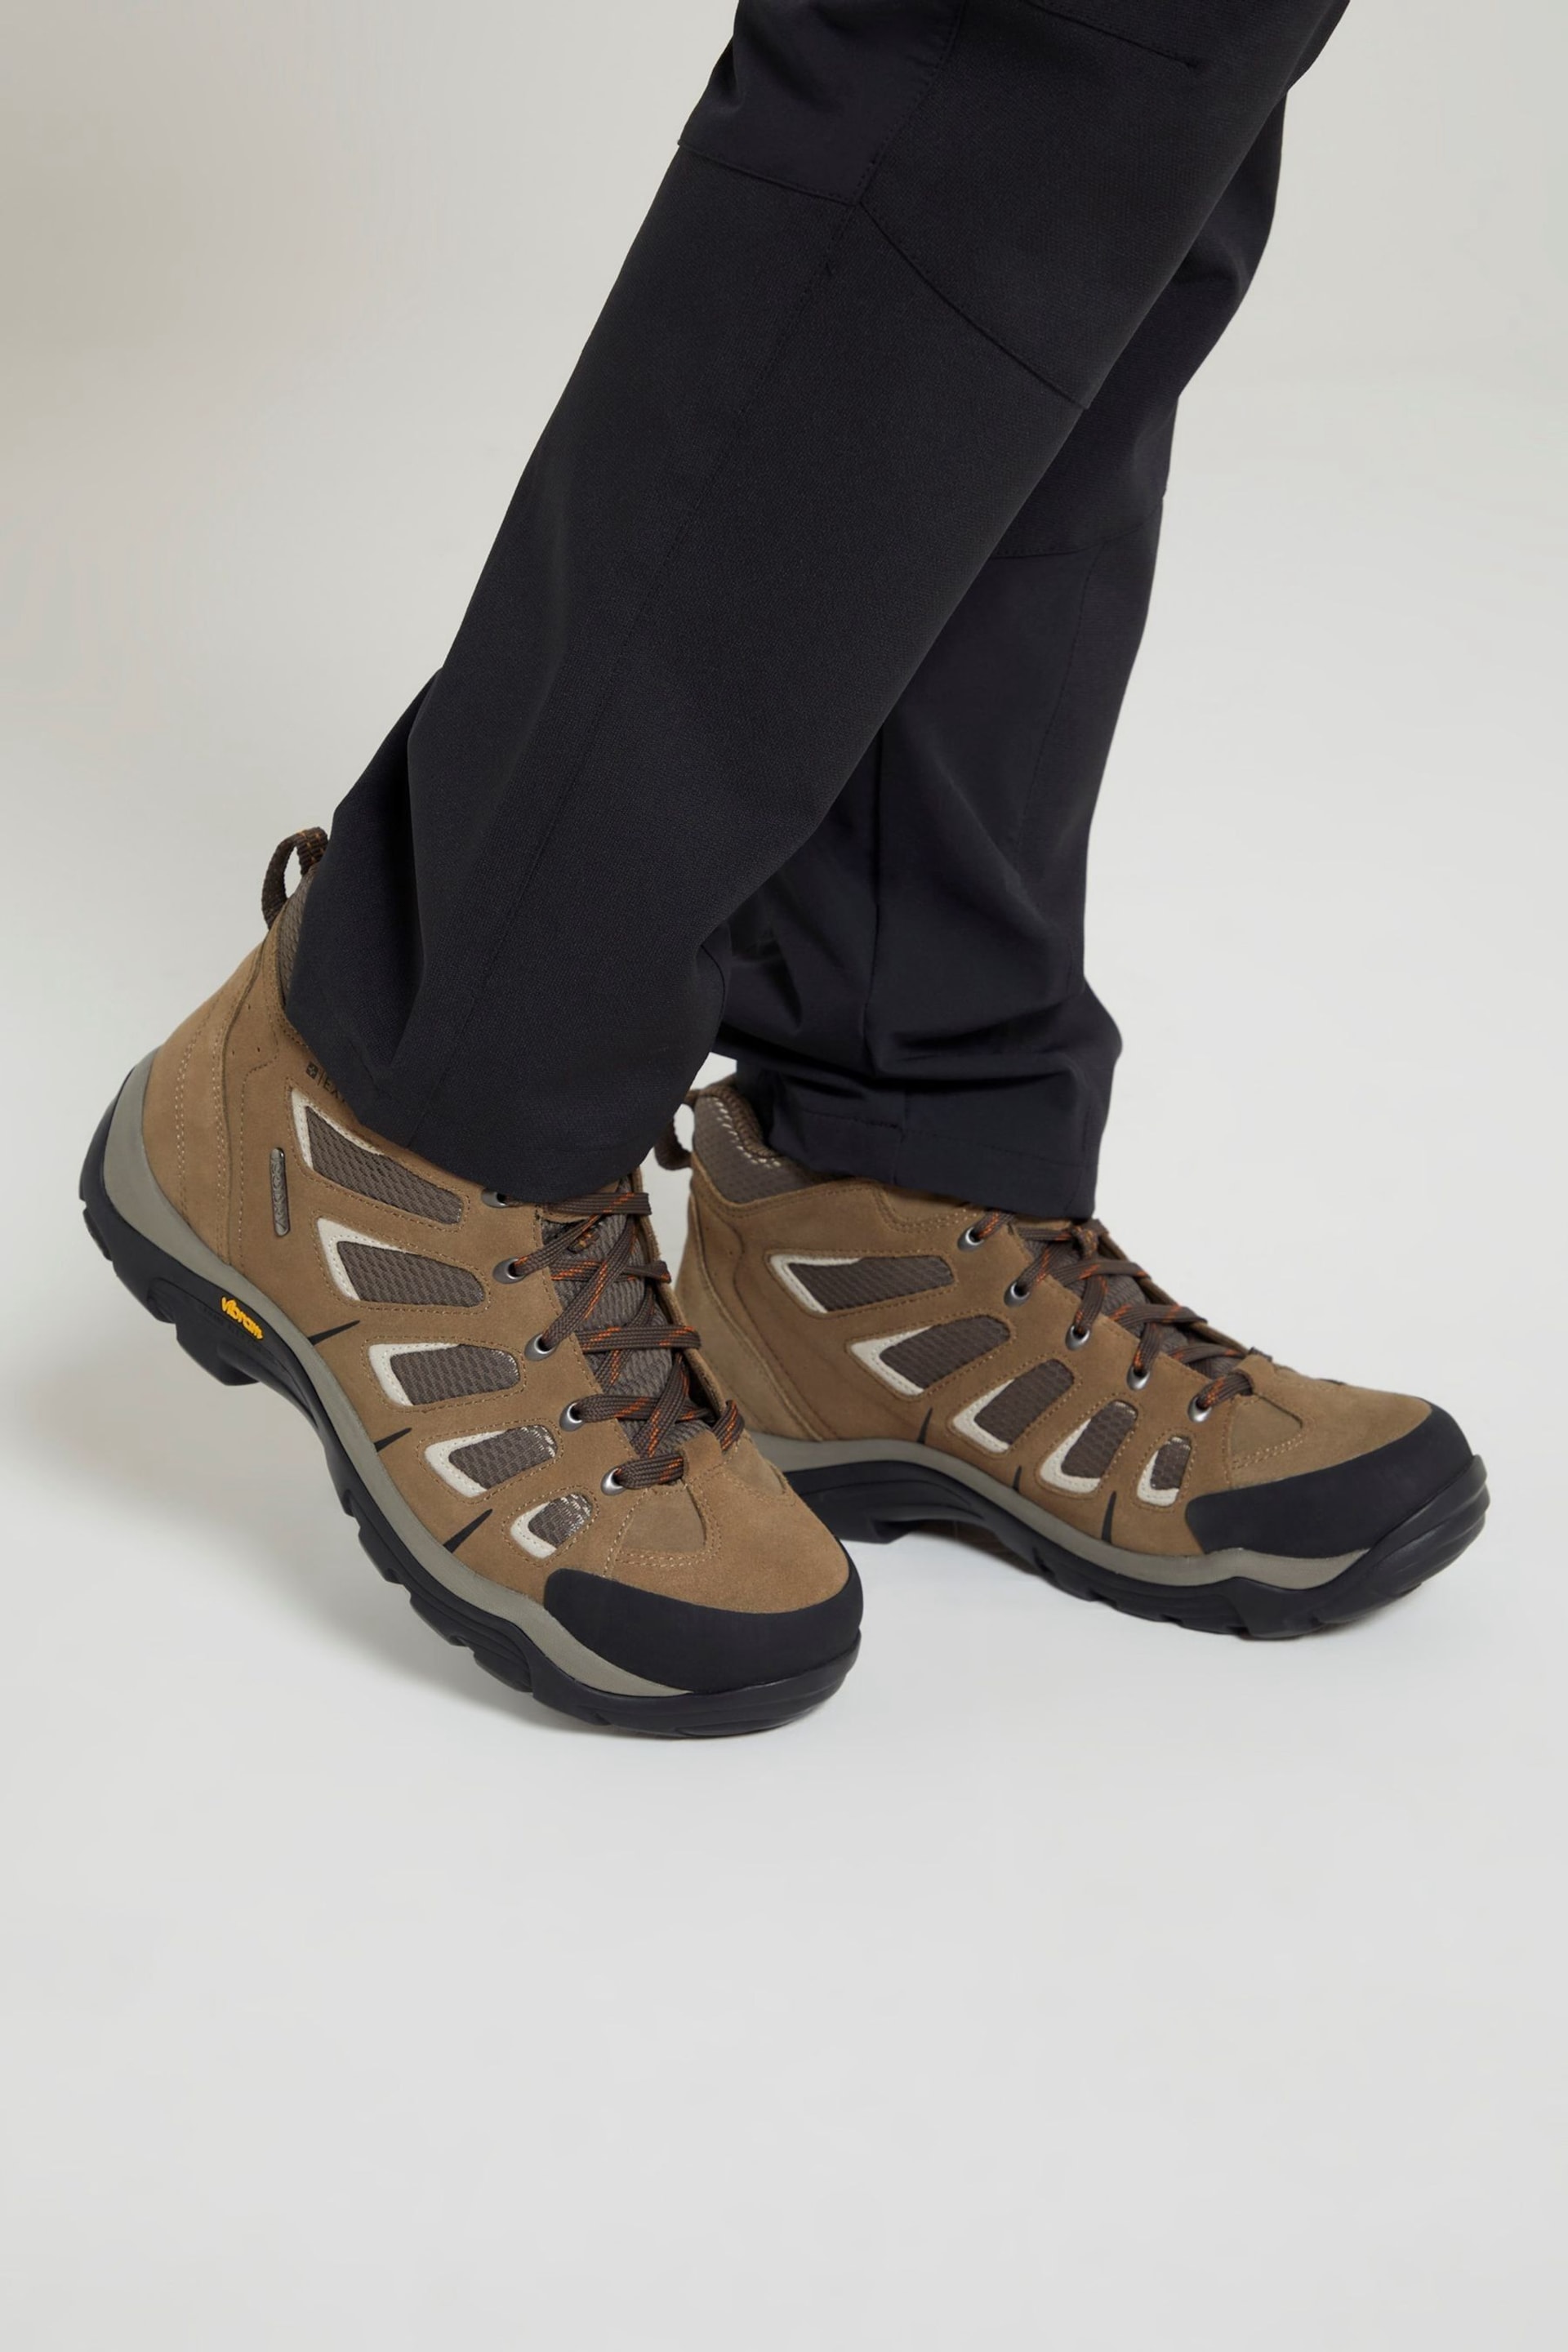 Mountain Warehouse Brown Mens Wide Fit Field Waterproof Vibram Walking Boots - Image 2 of 5